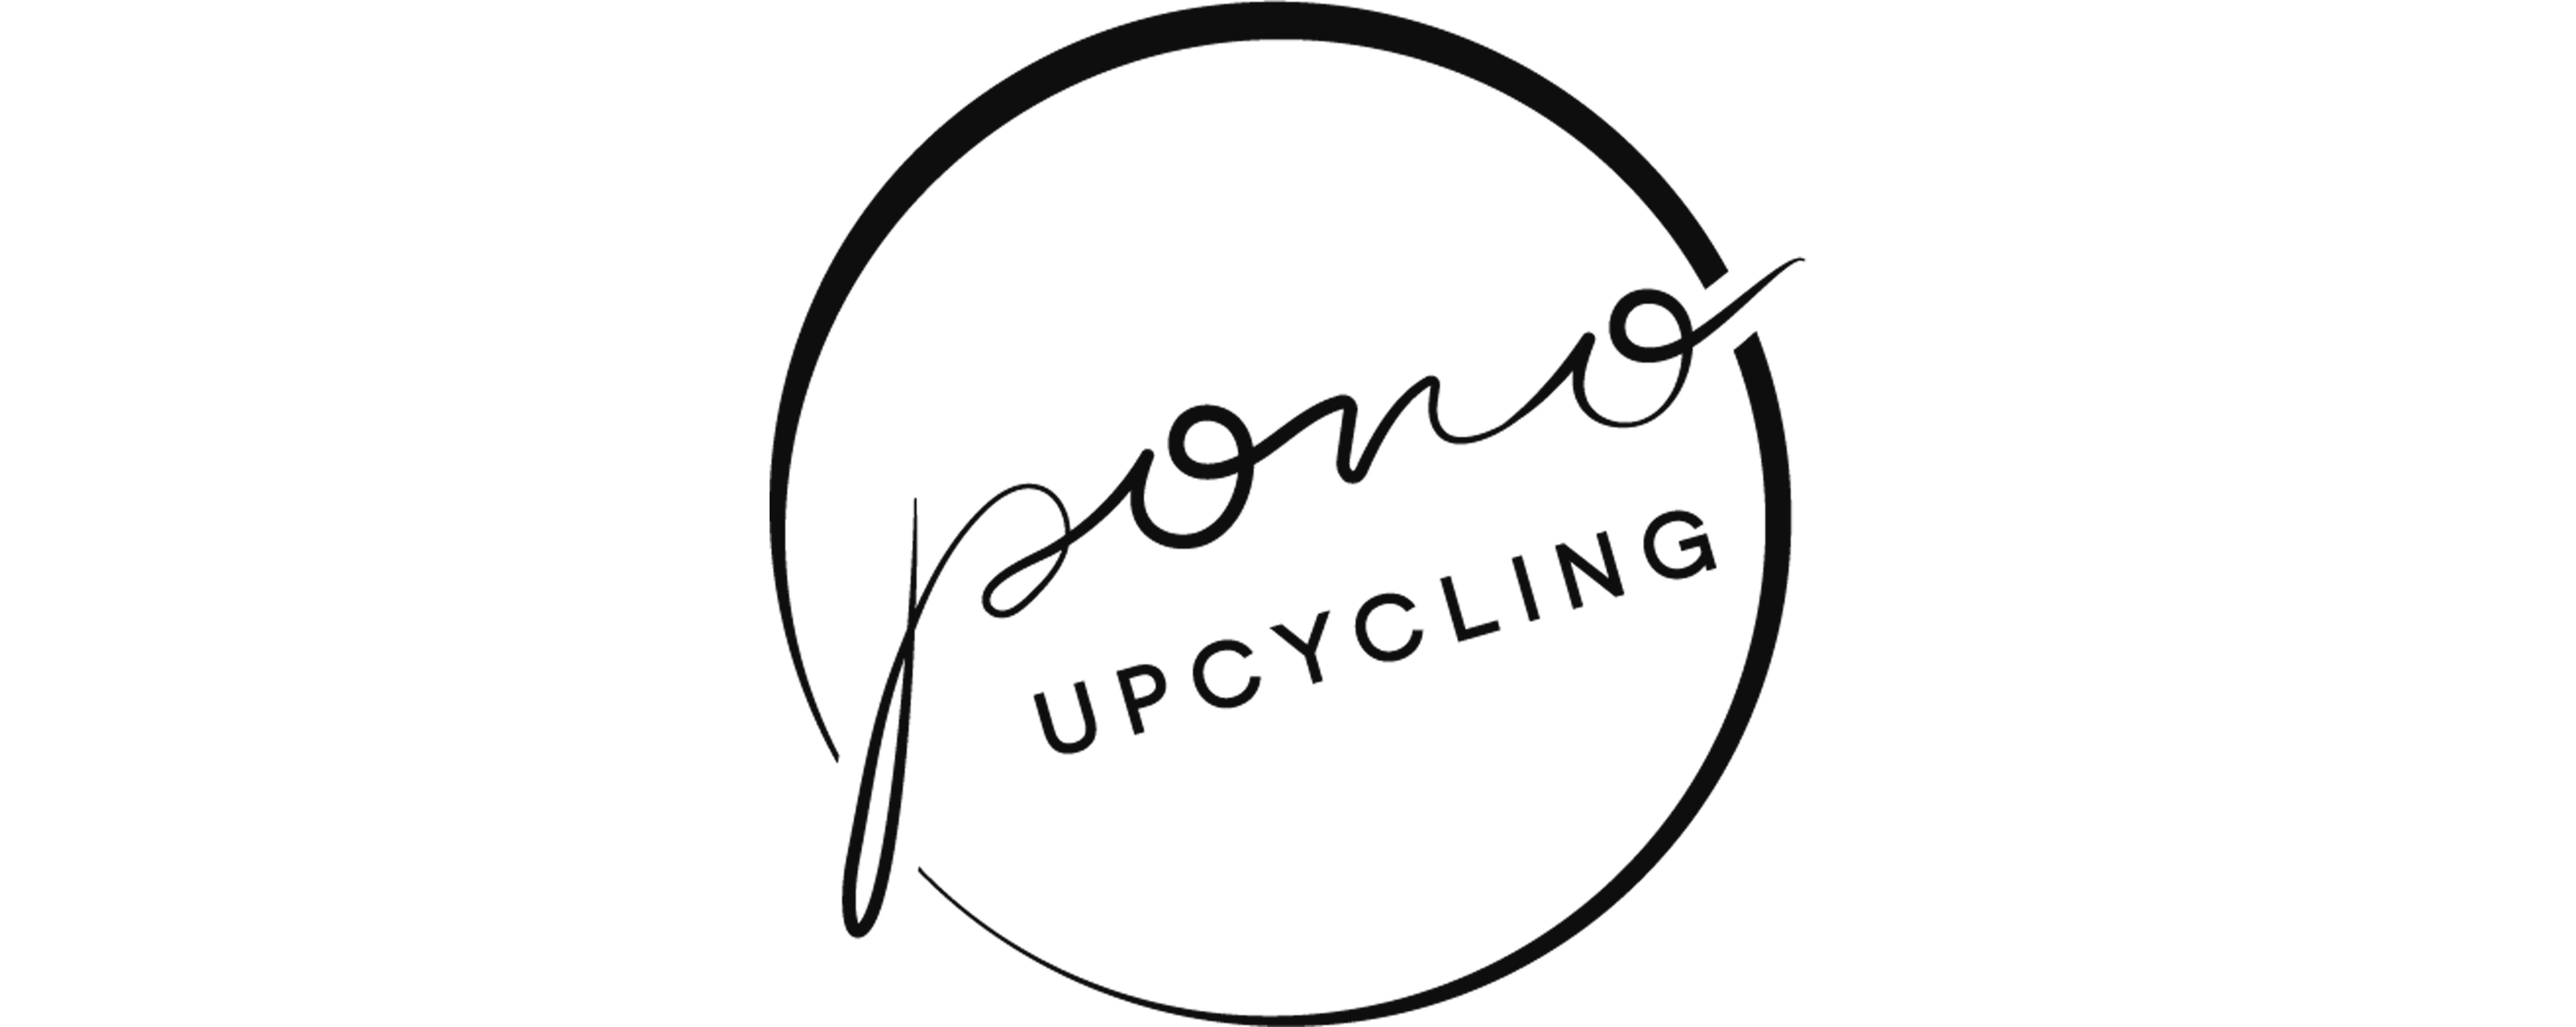 pono-logo